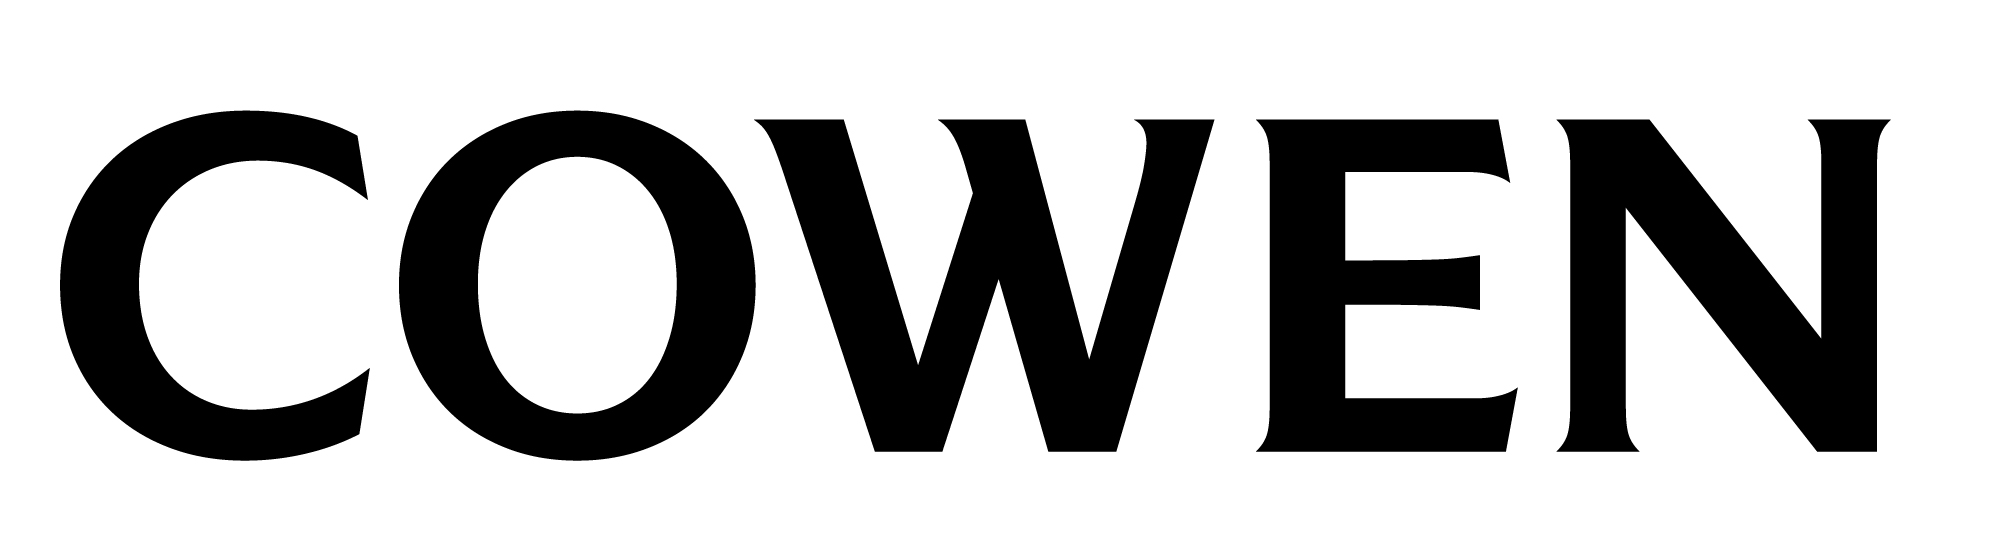 Cowen and Company LLC